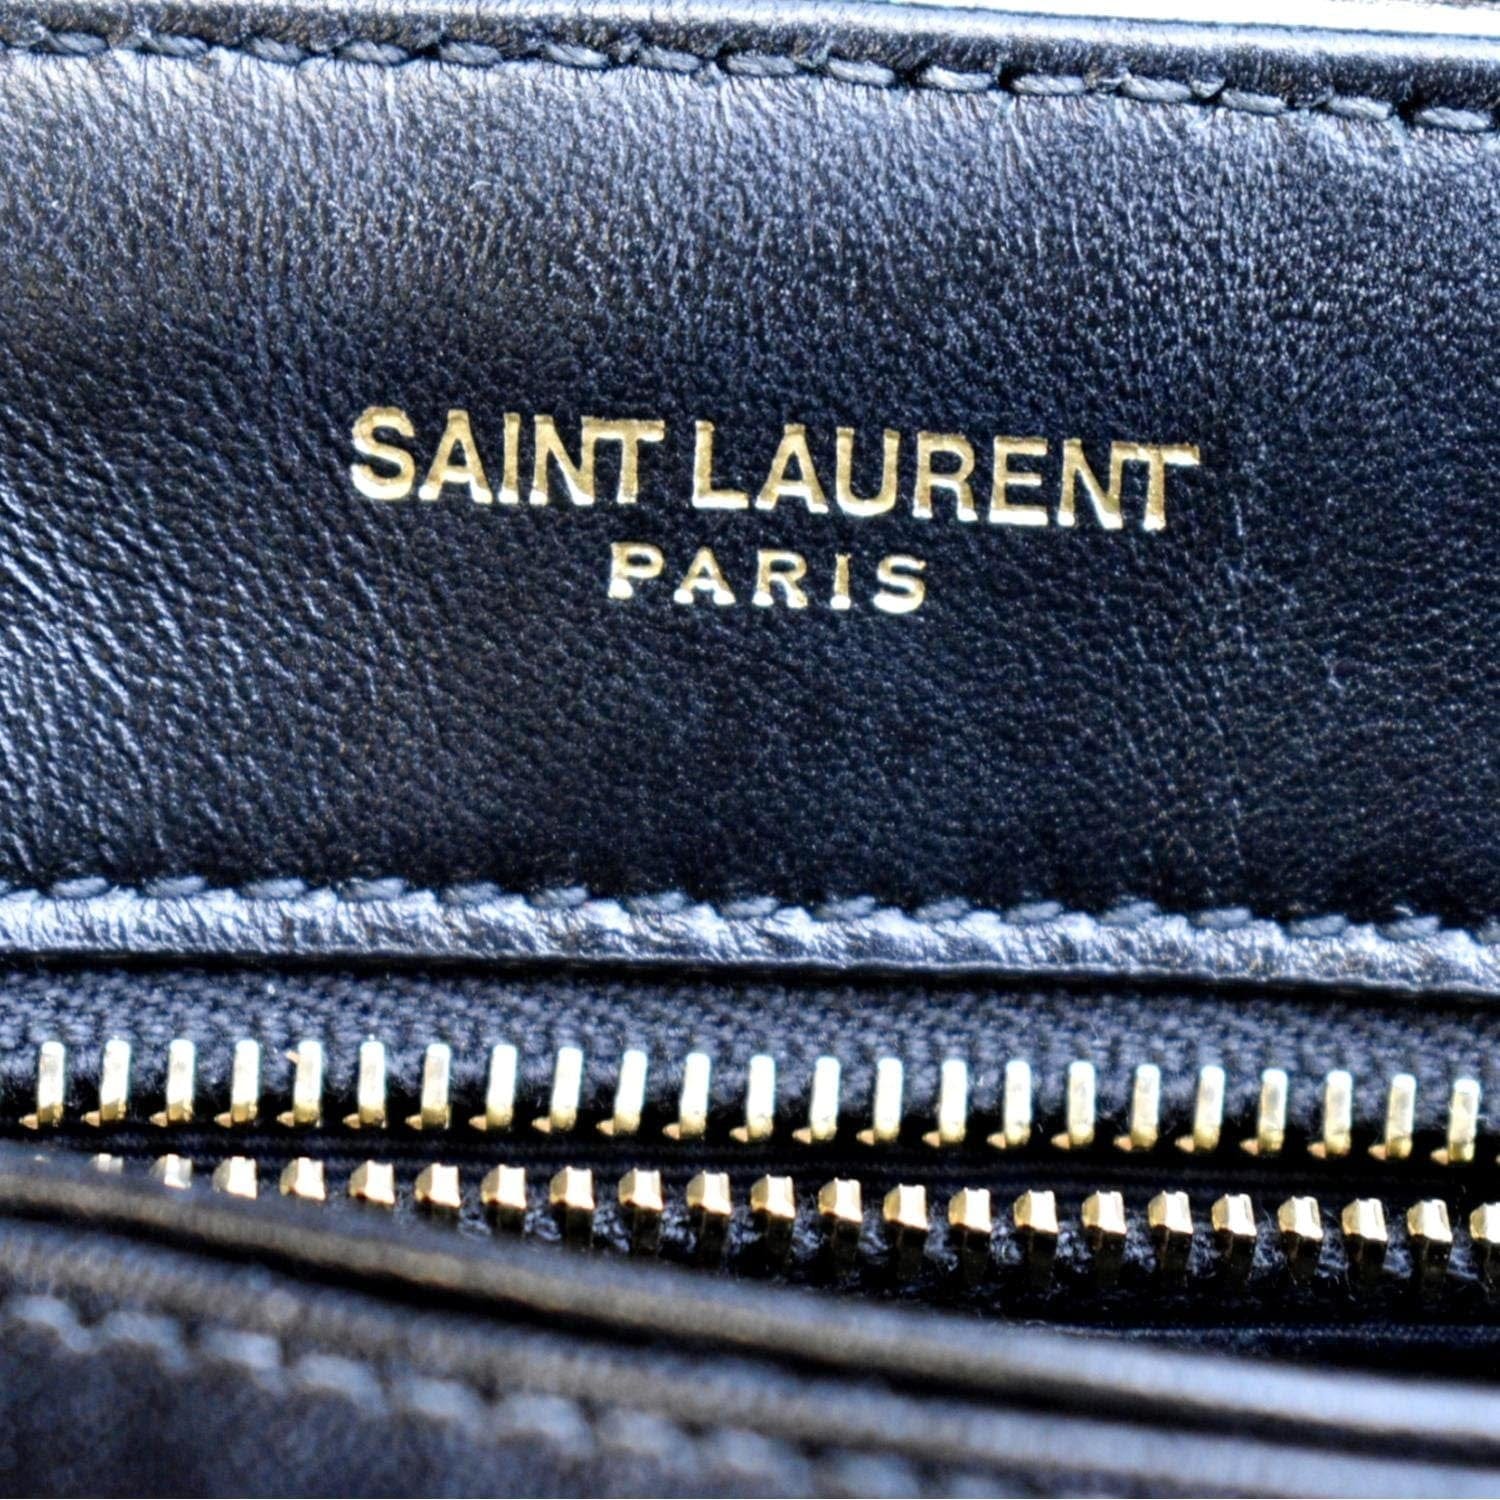 Quick Tips to Authenticate the Saint Laurent Loulou Satchel